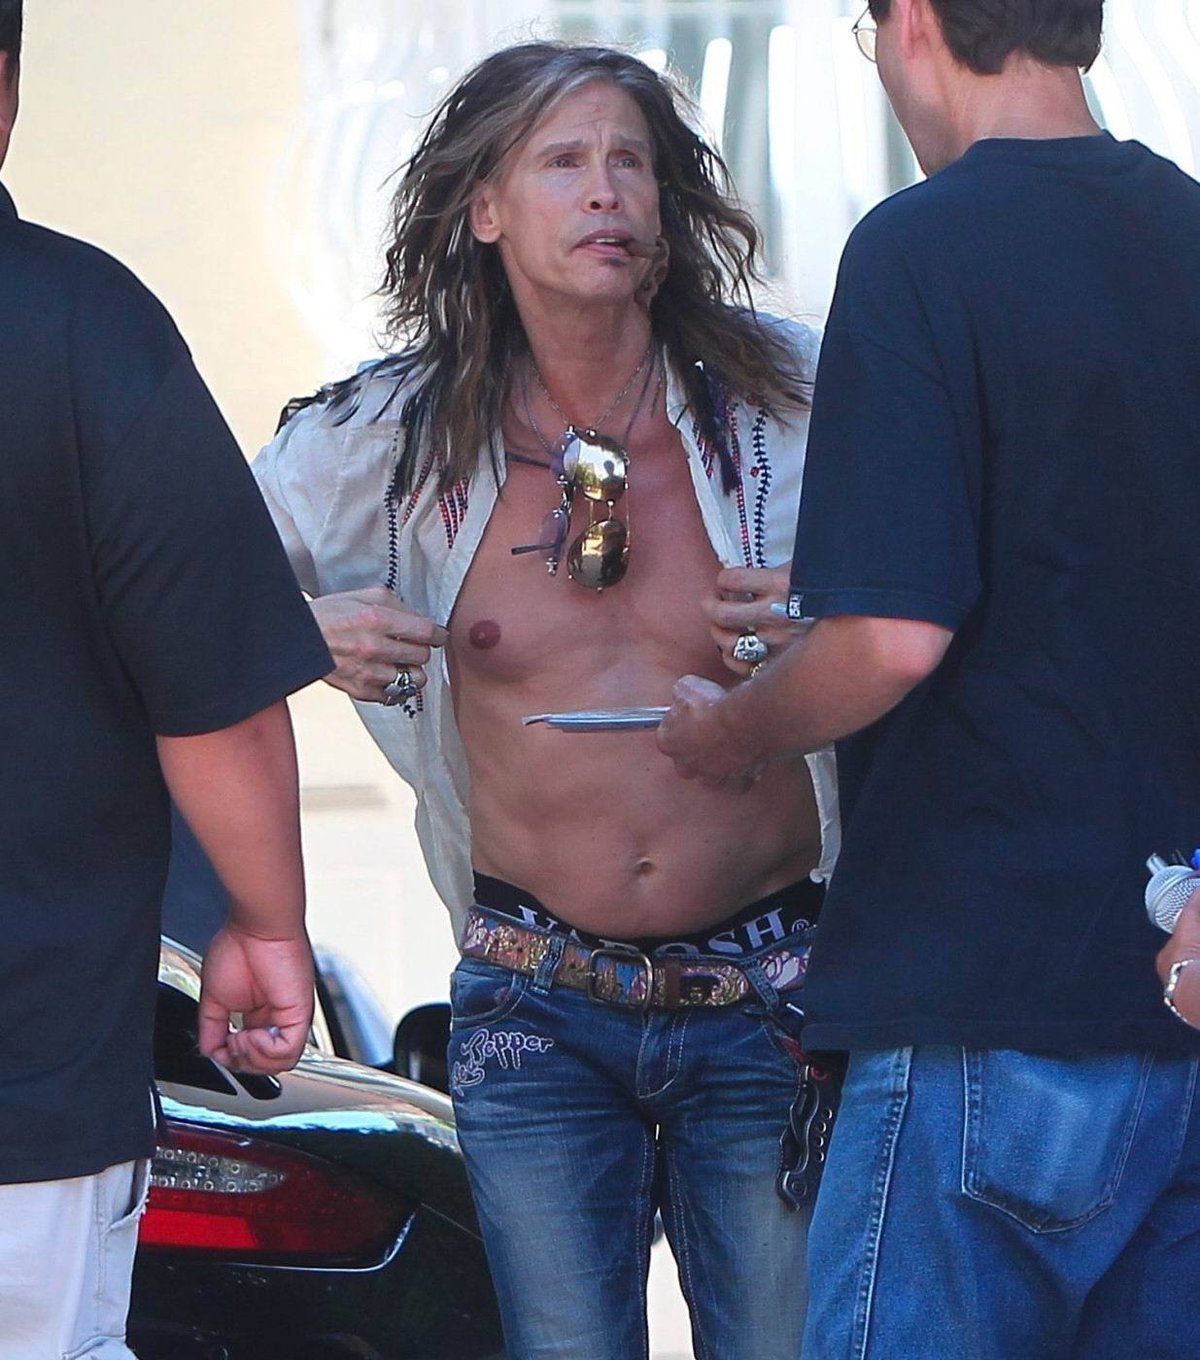 Frontman skupiny Aerosmith se na ulici odhaloval